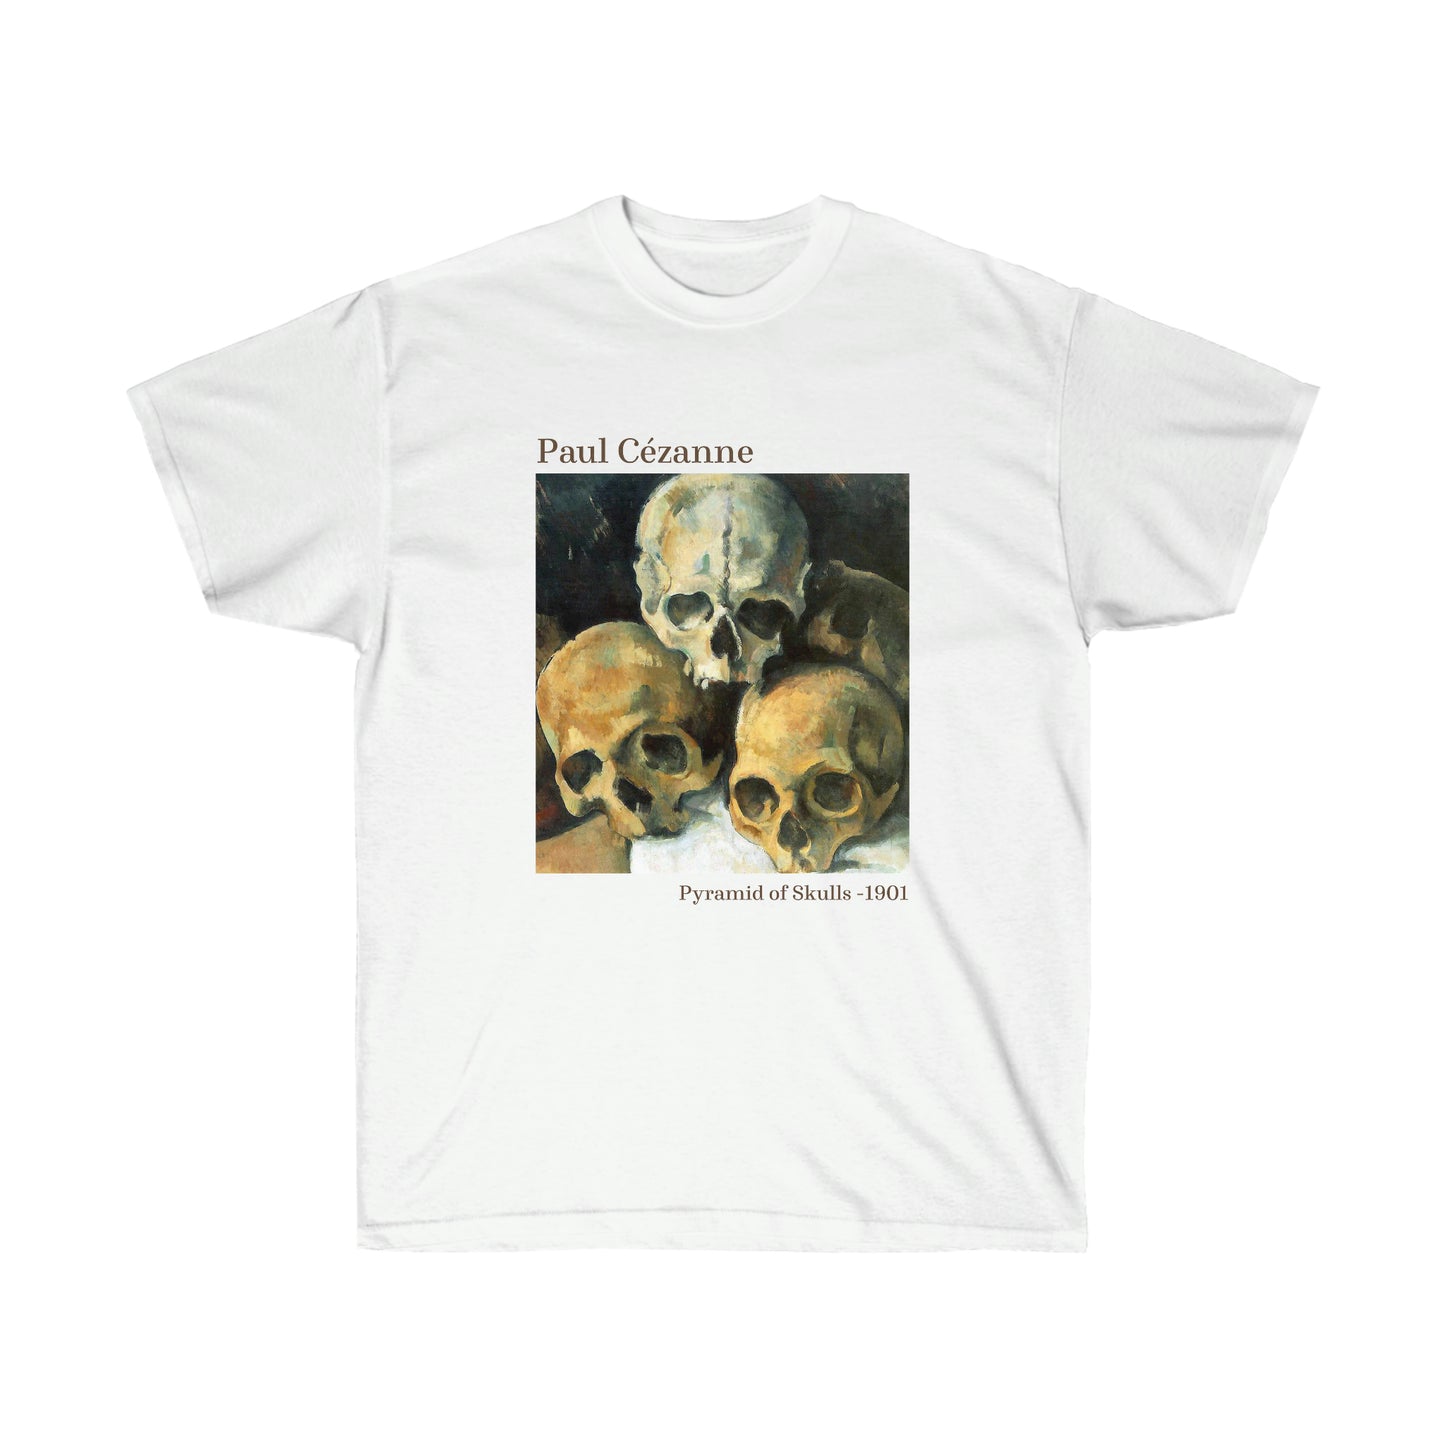 Paul Cézanne Pyramid of Skulls T-shirt